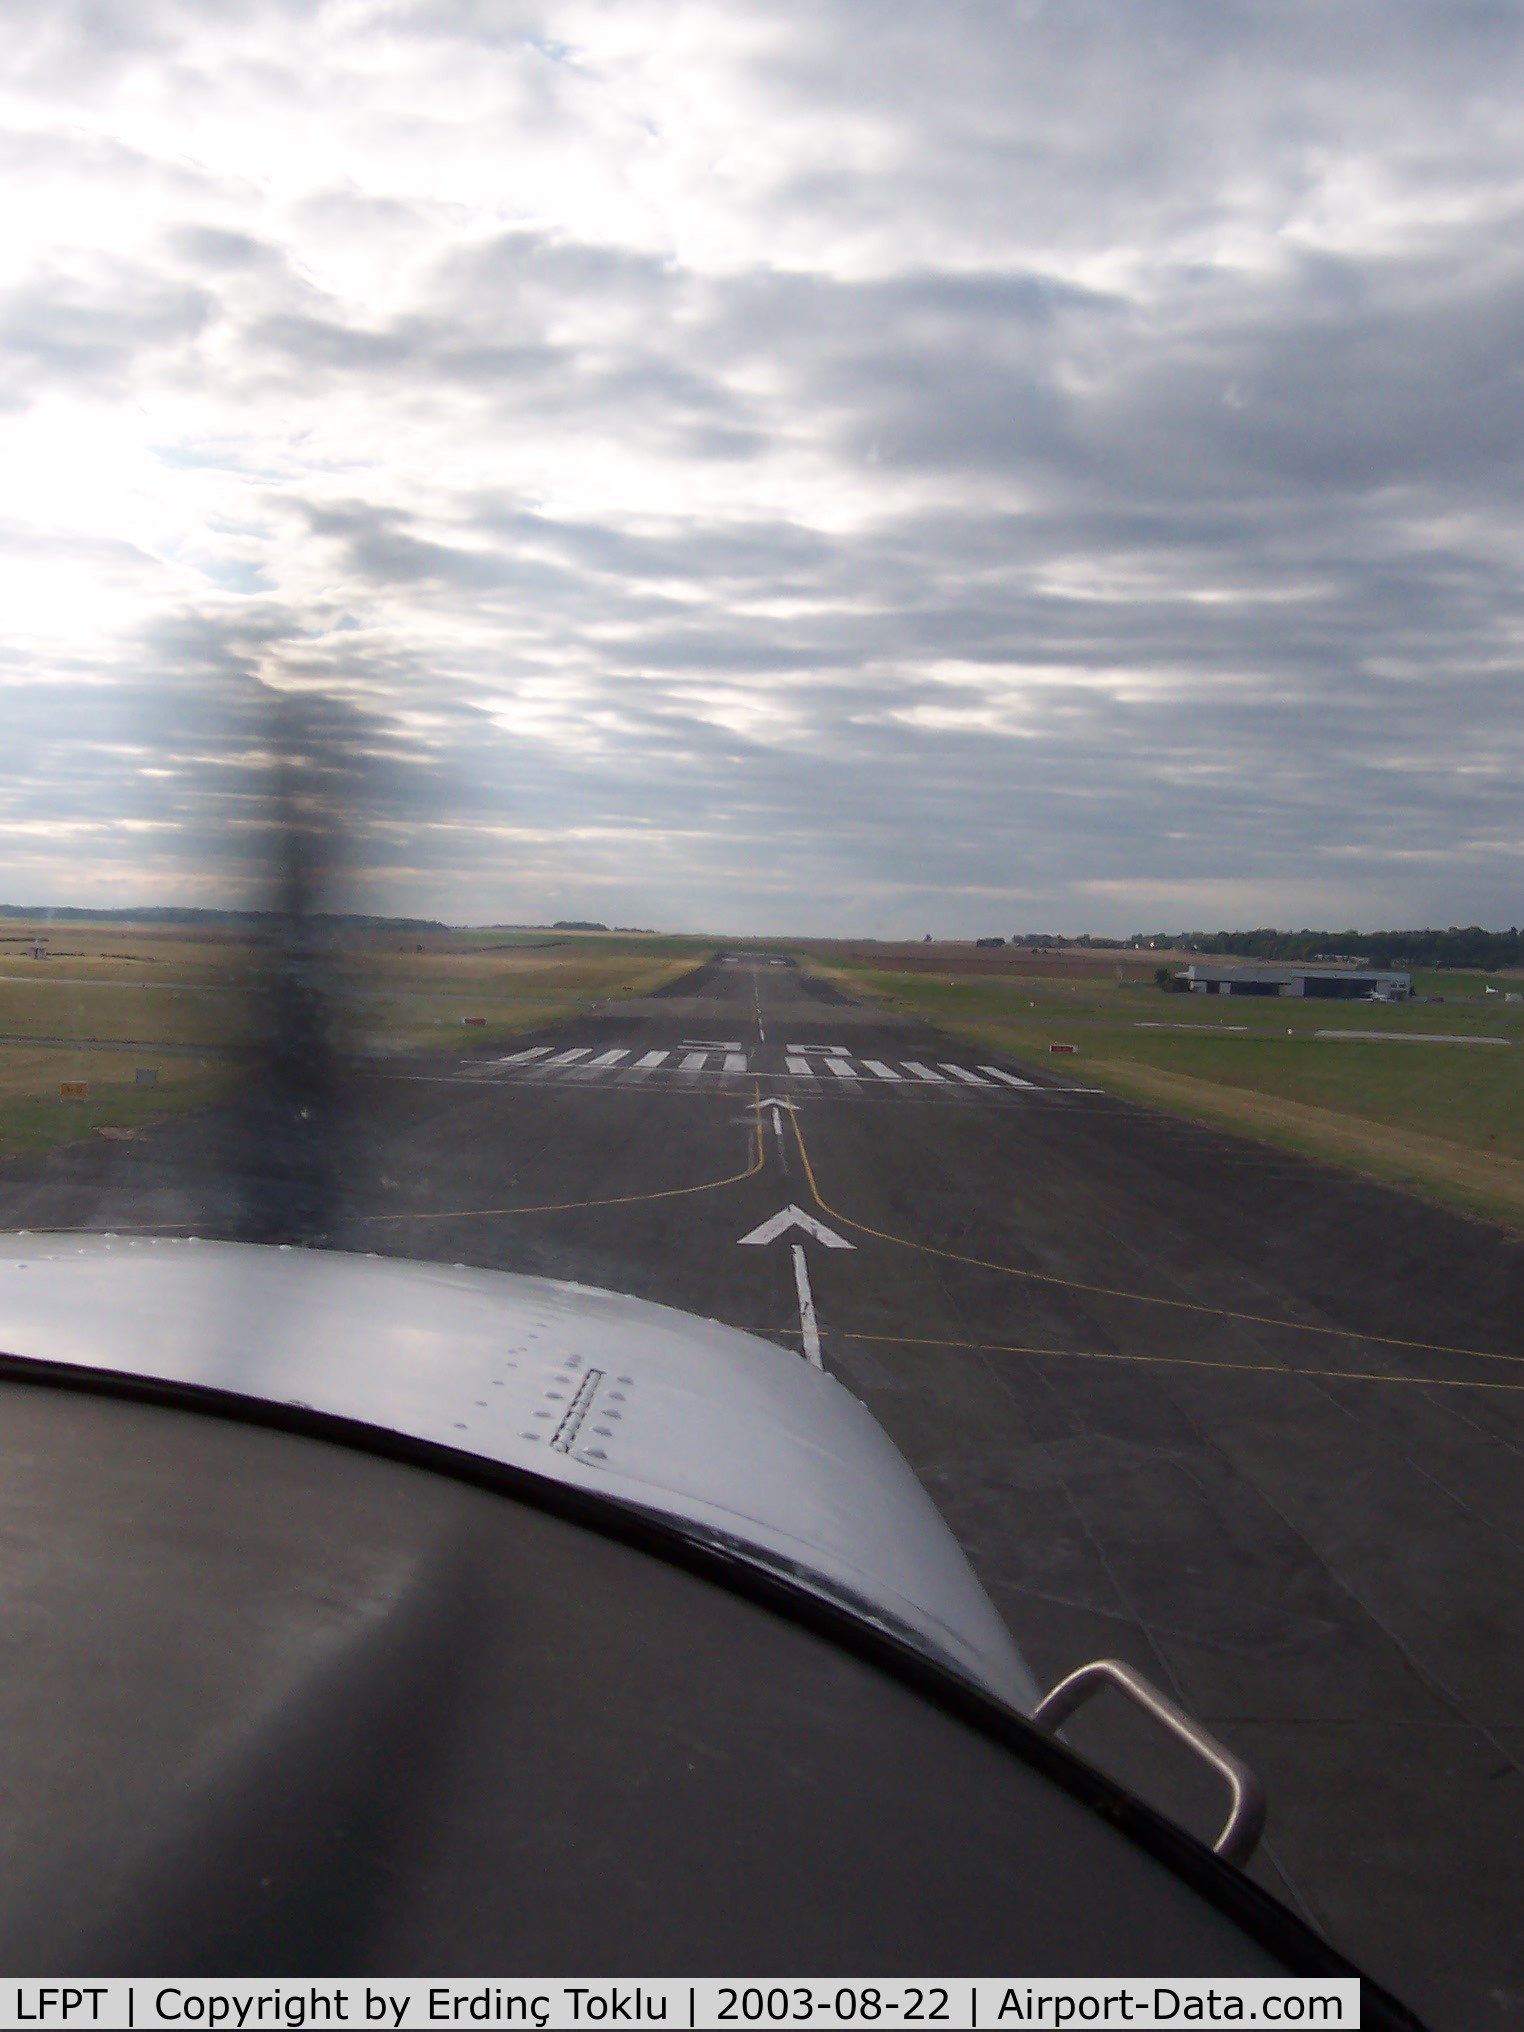 Pontoise Cormeilles-en-Vexin Airport, Pontoise France (LFPT) - Landing on the Rwy 30 a bit just for the numbers